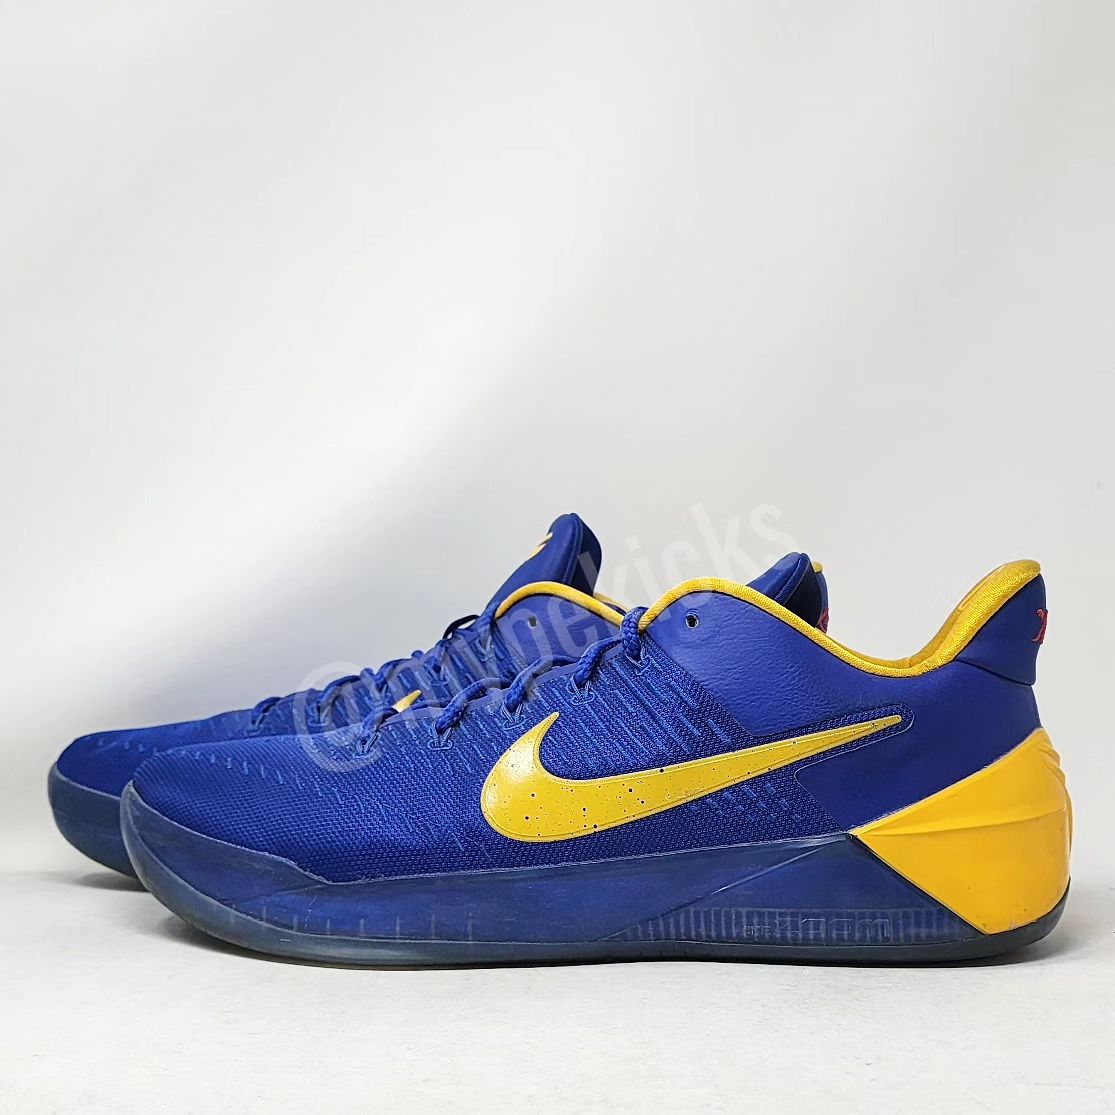 Nike Kobe A.D. - Andre Iguodala Golden State Warriors PE